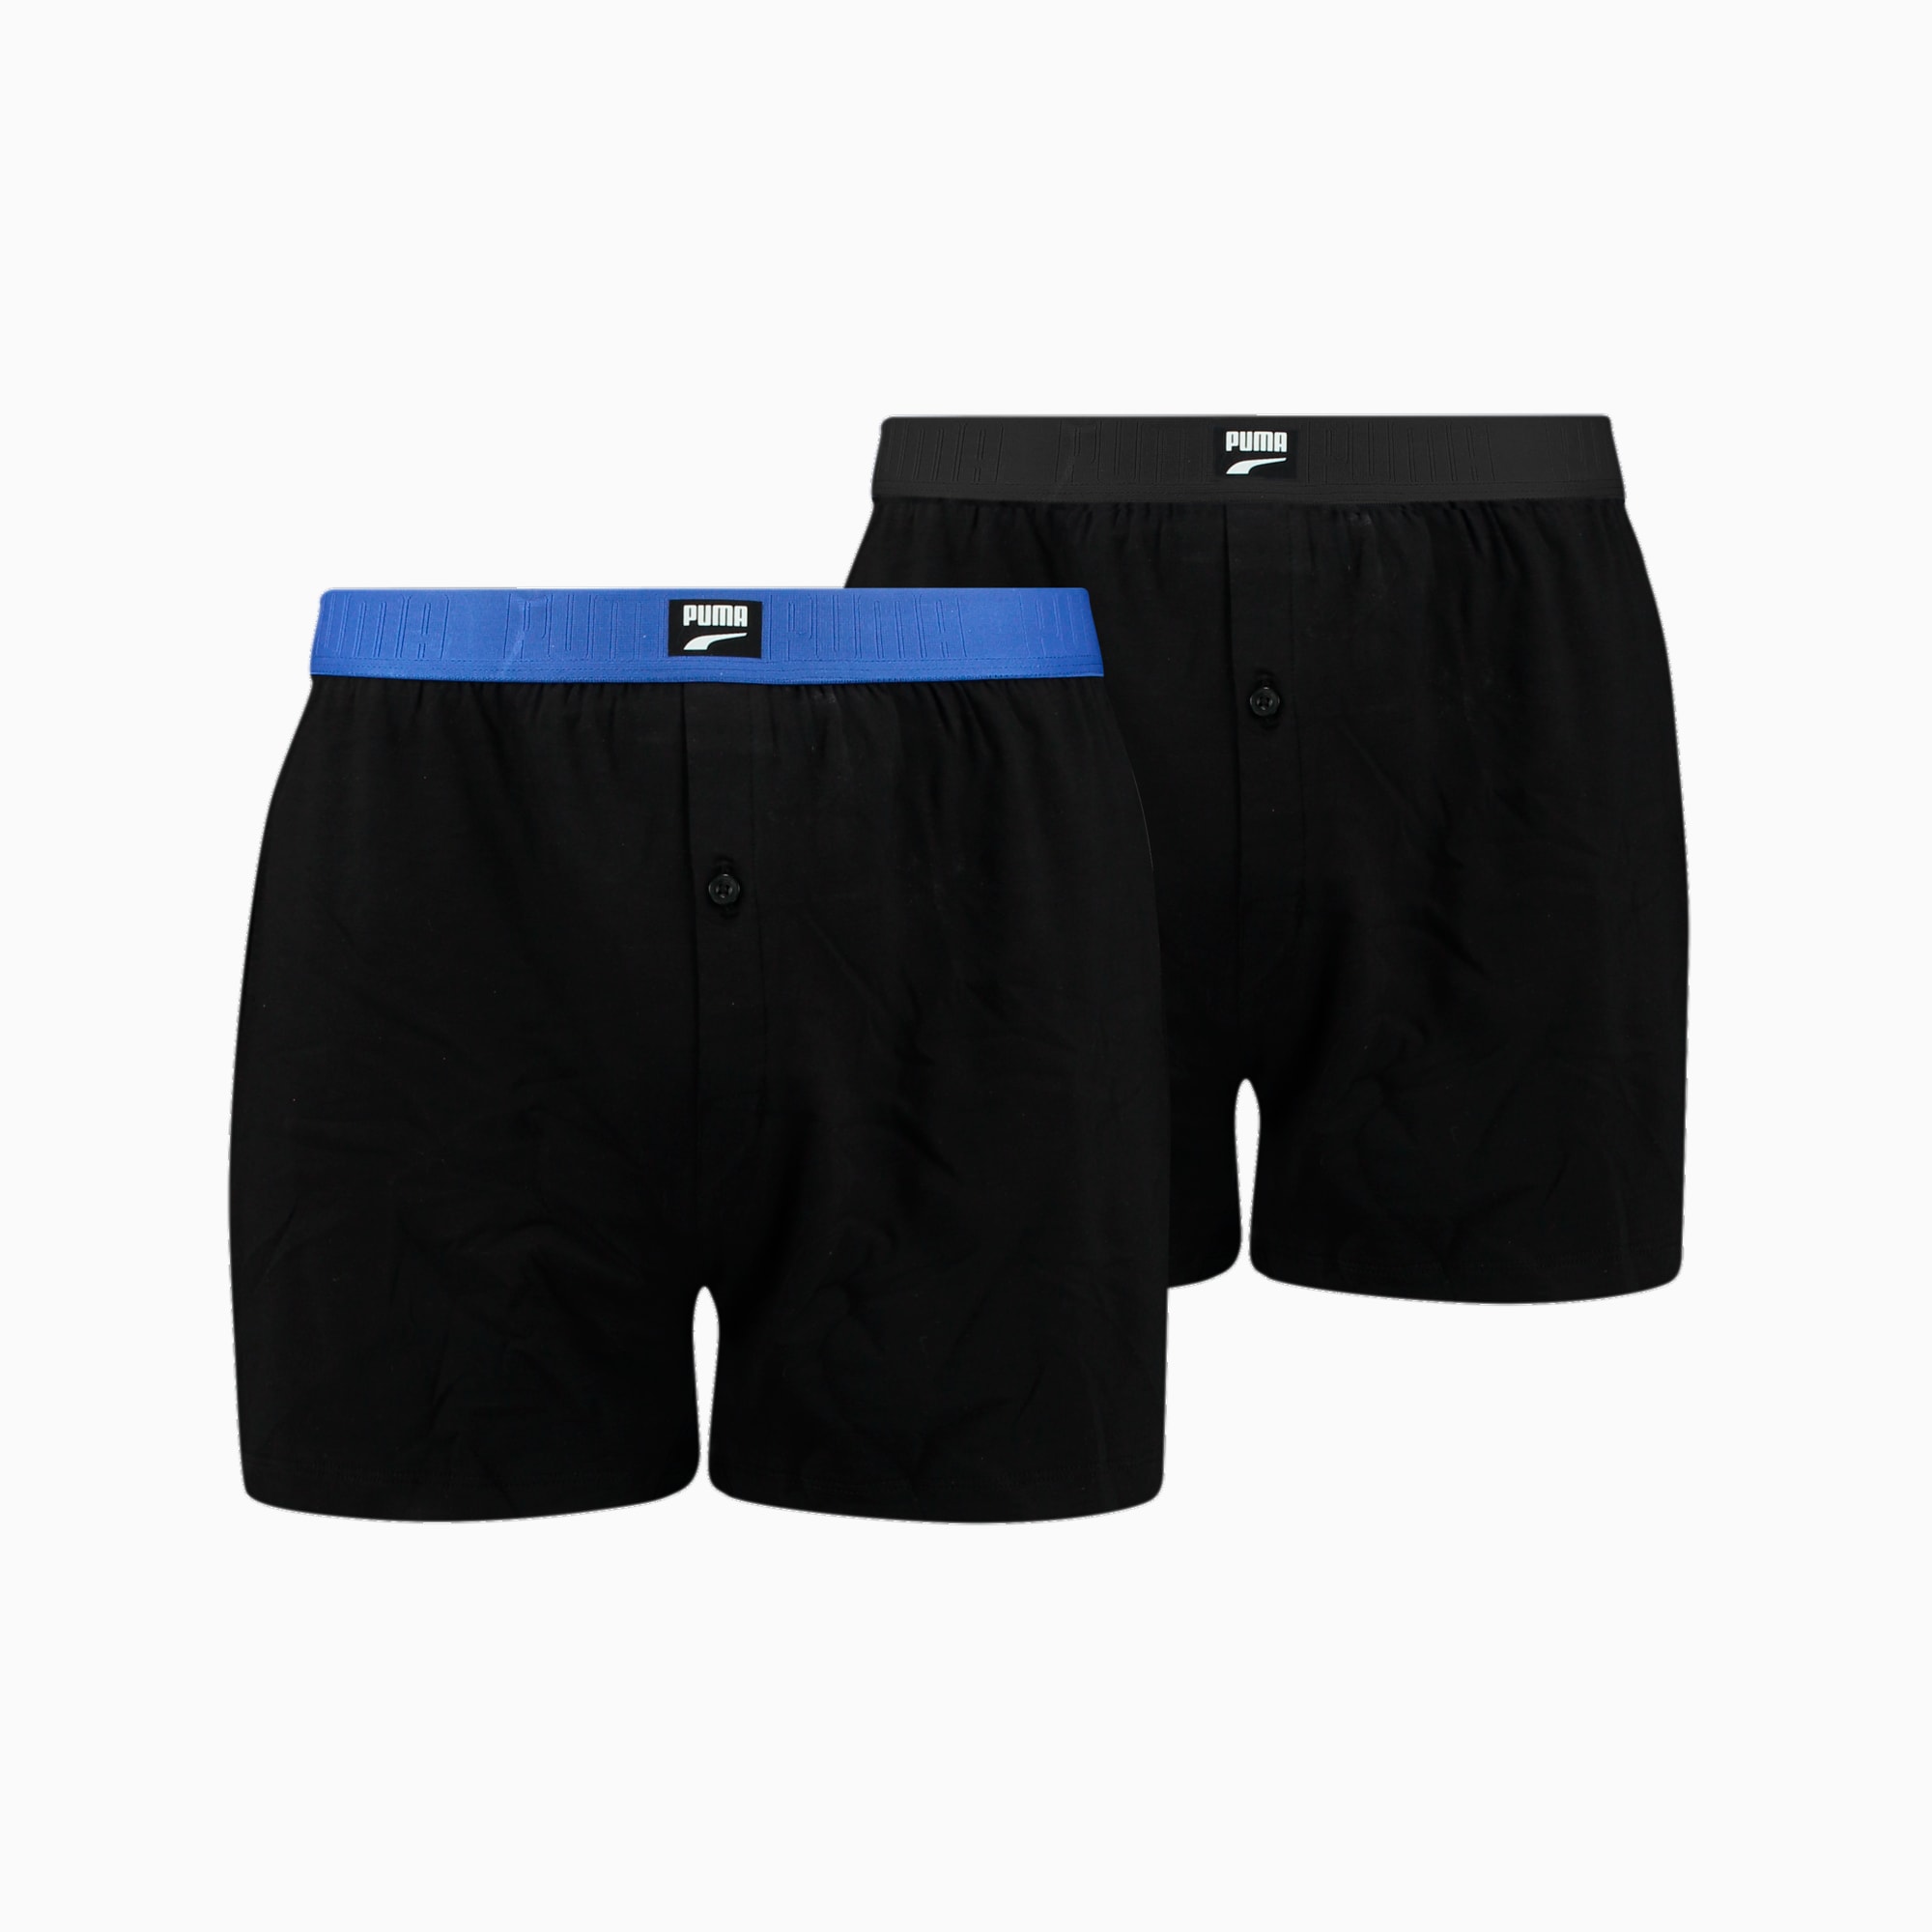 PUMA Ruimvallende Boxershorts, Blauw/Zwart